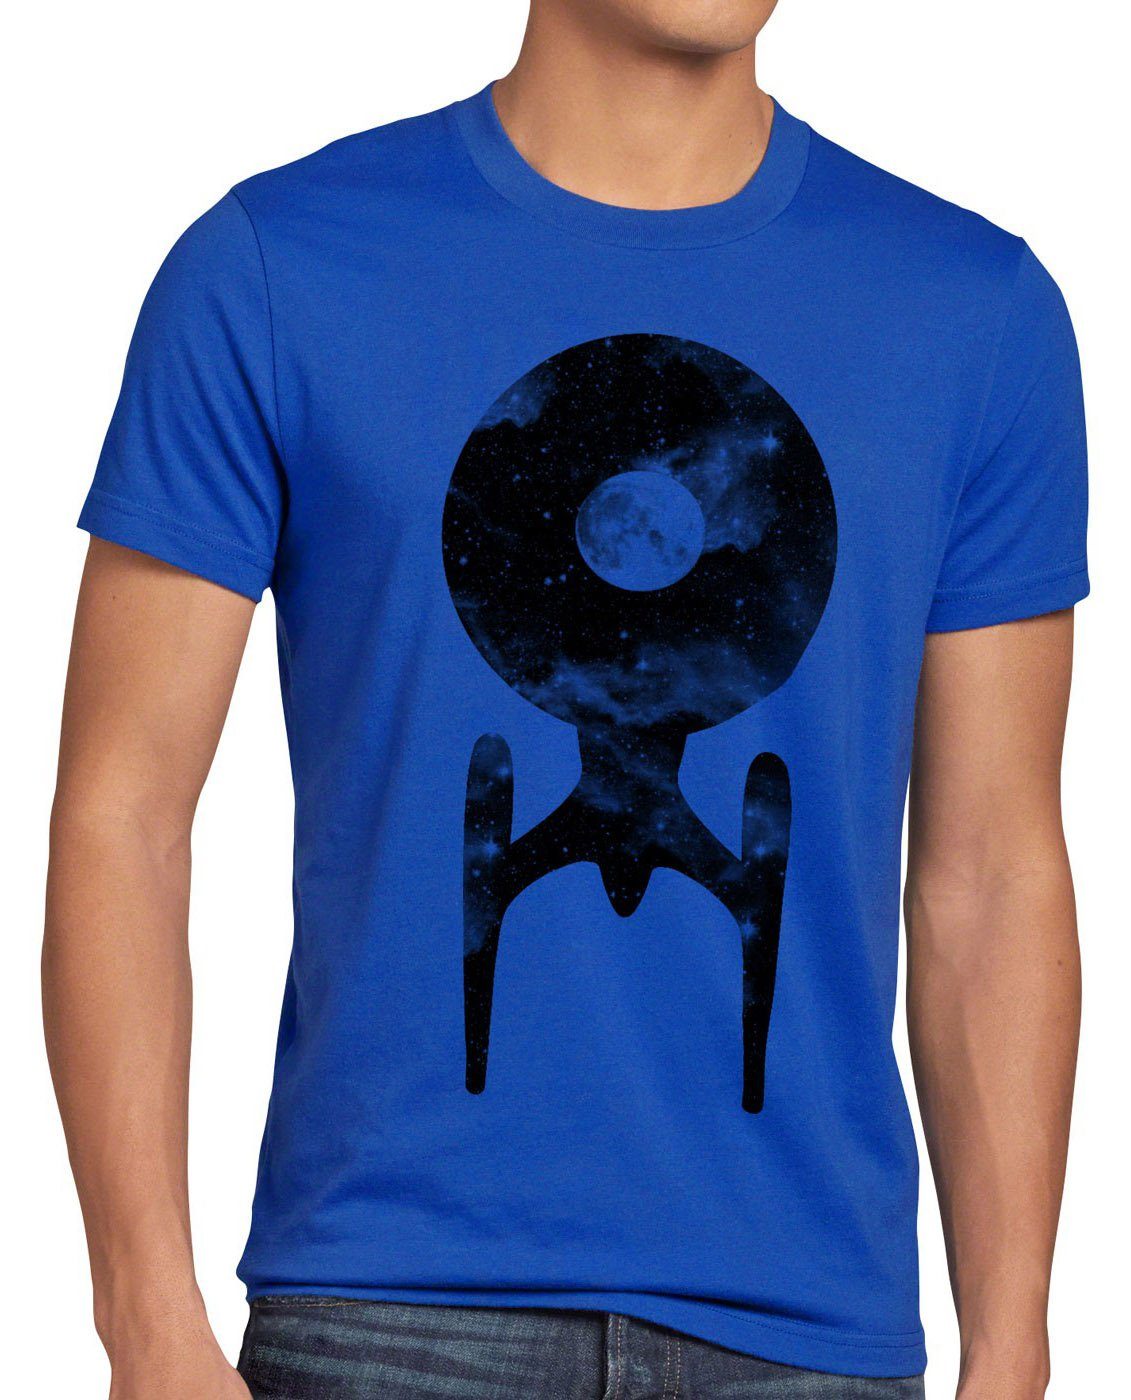 style3 Print-Shirt Herren T-Shirt Trek blau ncc-1701-d star Raumschiff trekkie enterprise uss trekkie